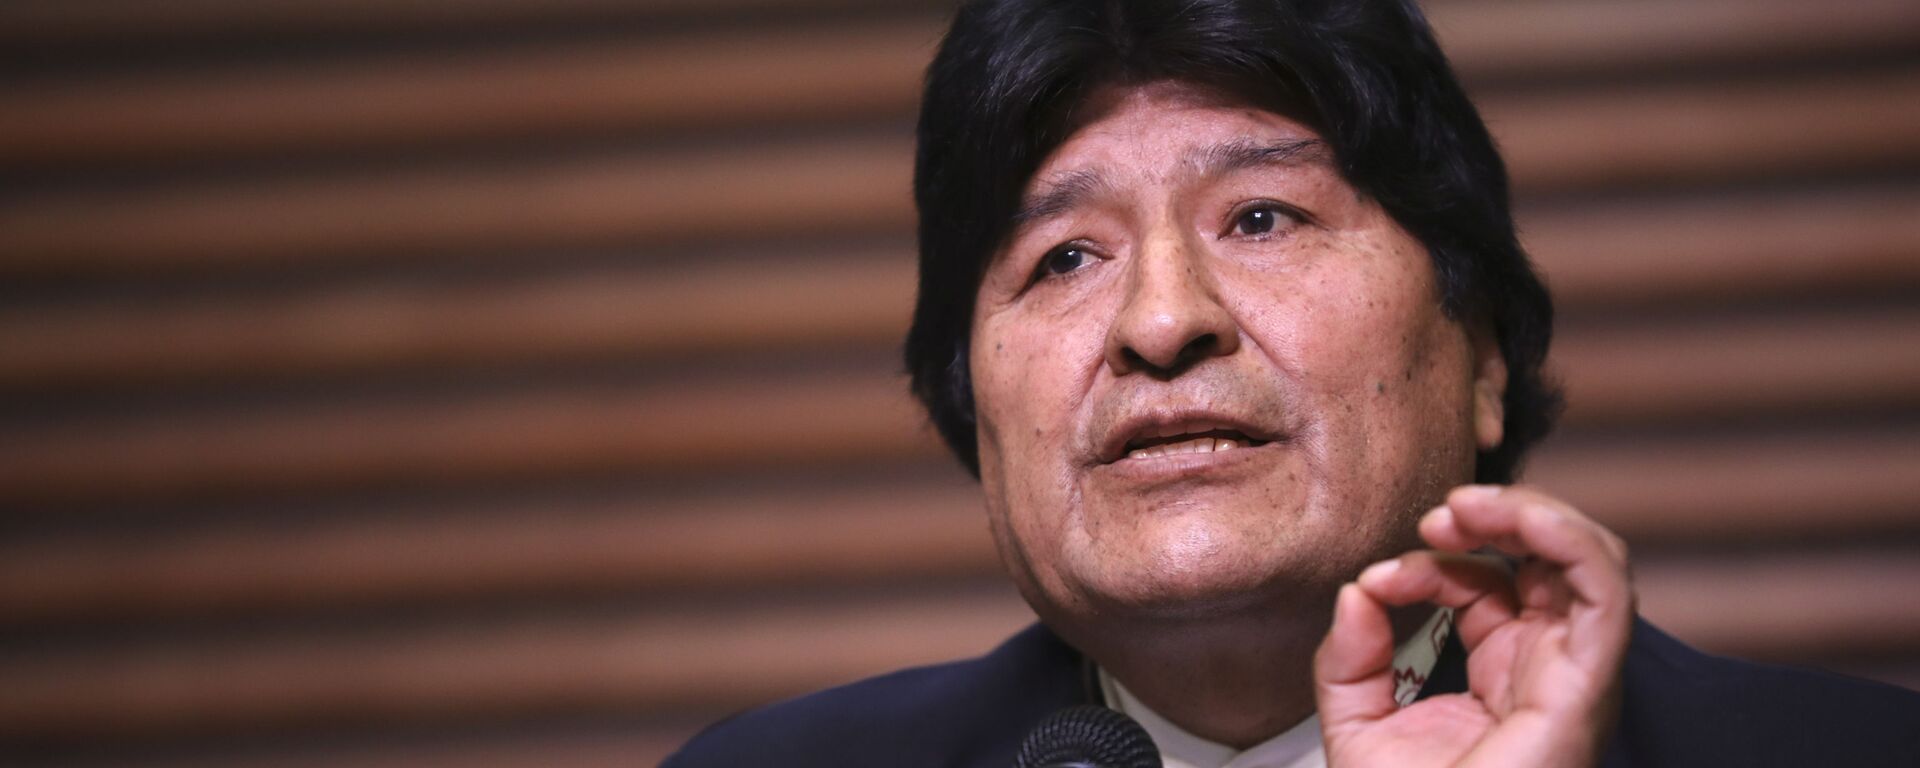 Evo Morales, expresidente boliviano - Sputnik Mundo, 1920, 27.12.2020